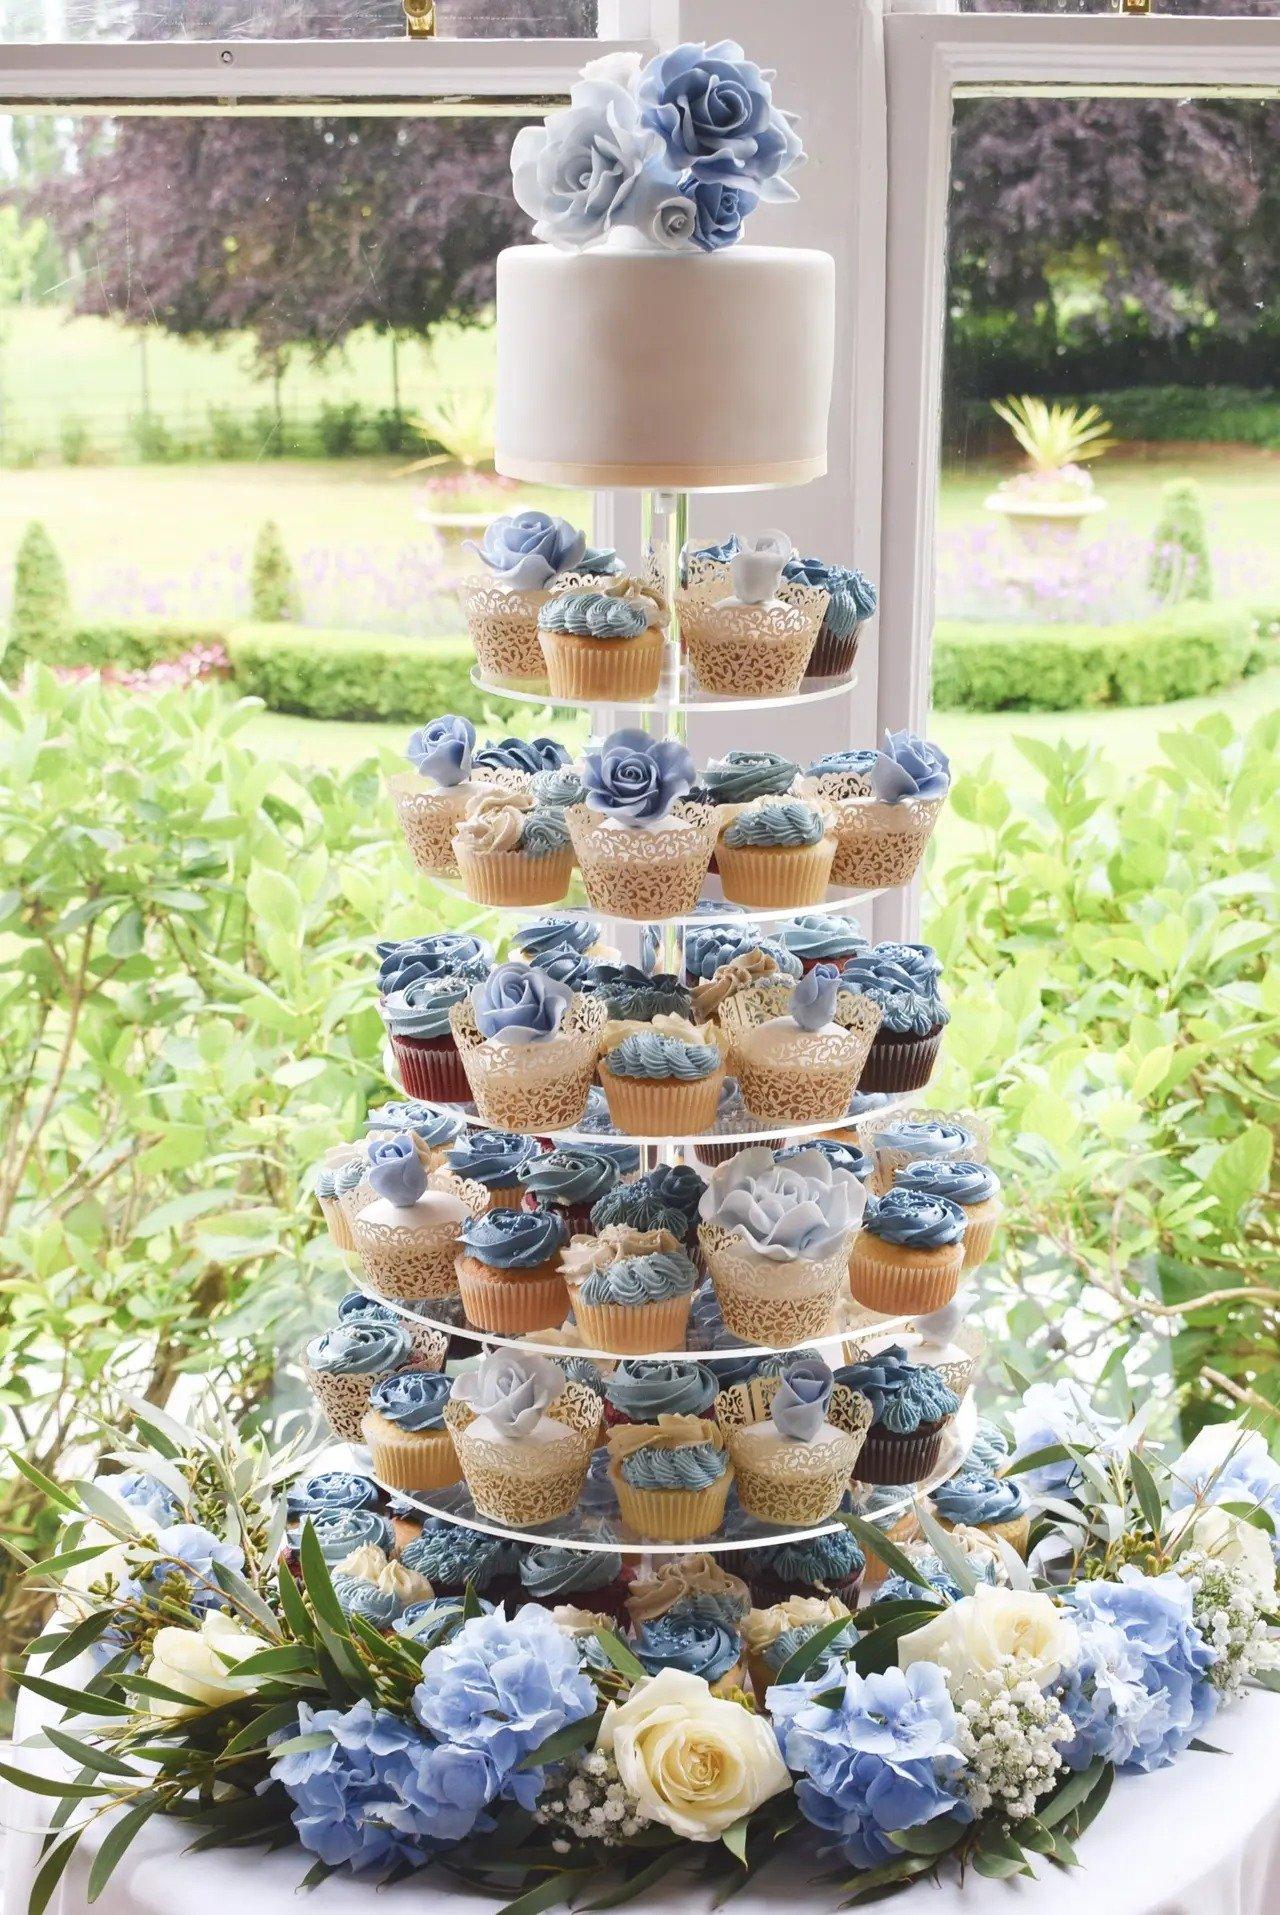 23 Wedding Cupcake Ideas Slideshow for Any Wedding | LoveToKnow